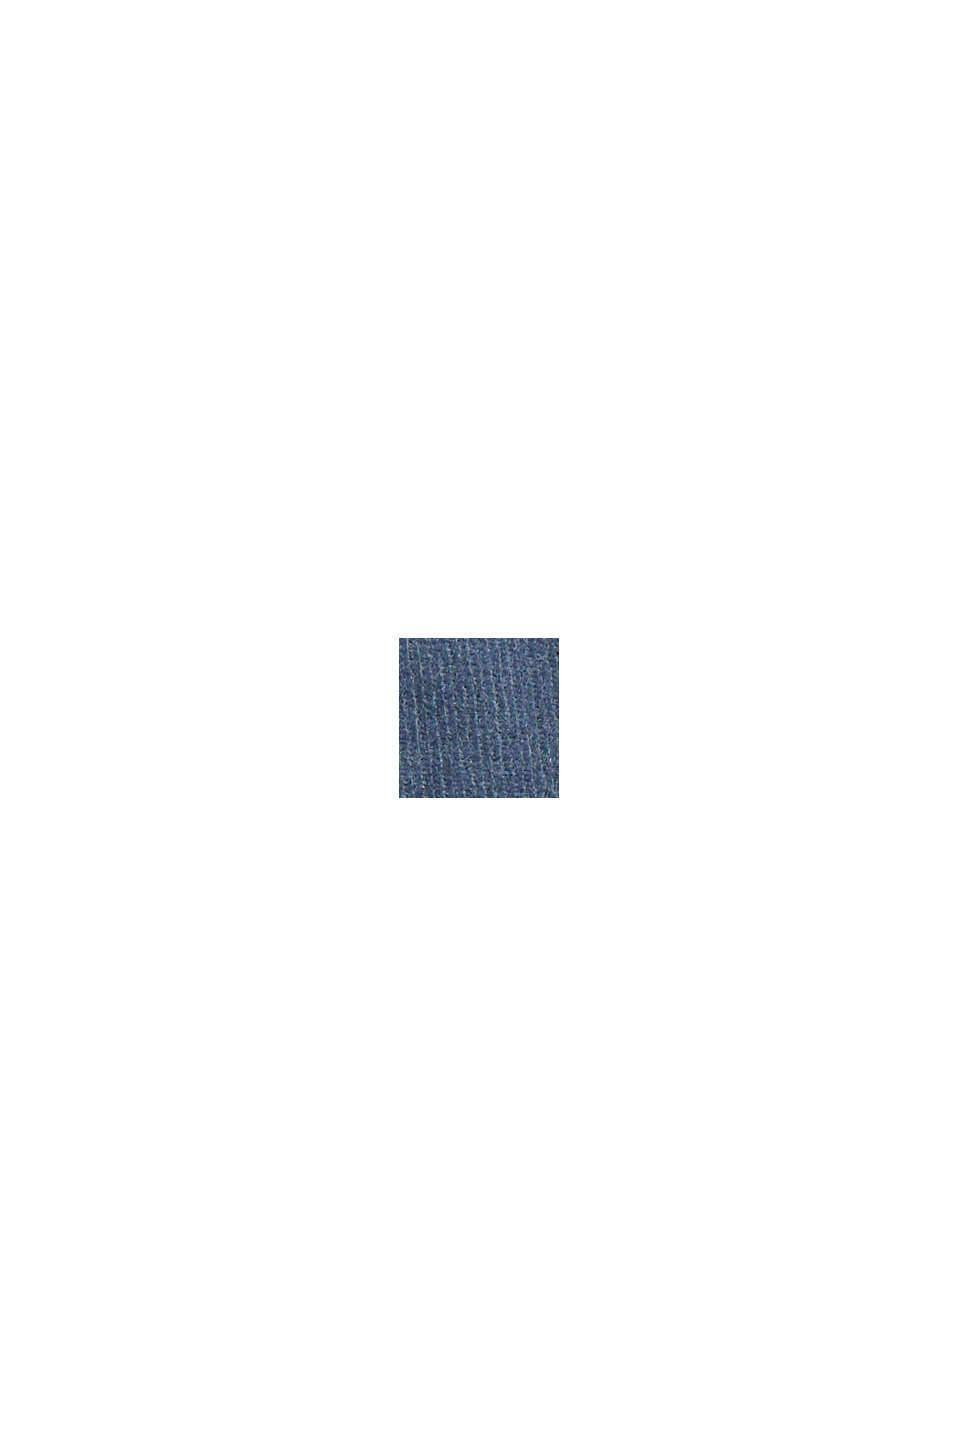 Pantalón de pana fina en mezcla de algodón, GREY BLUE, swatch